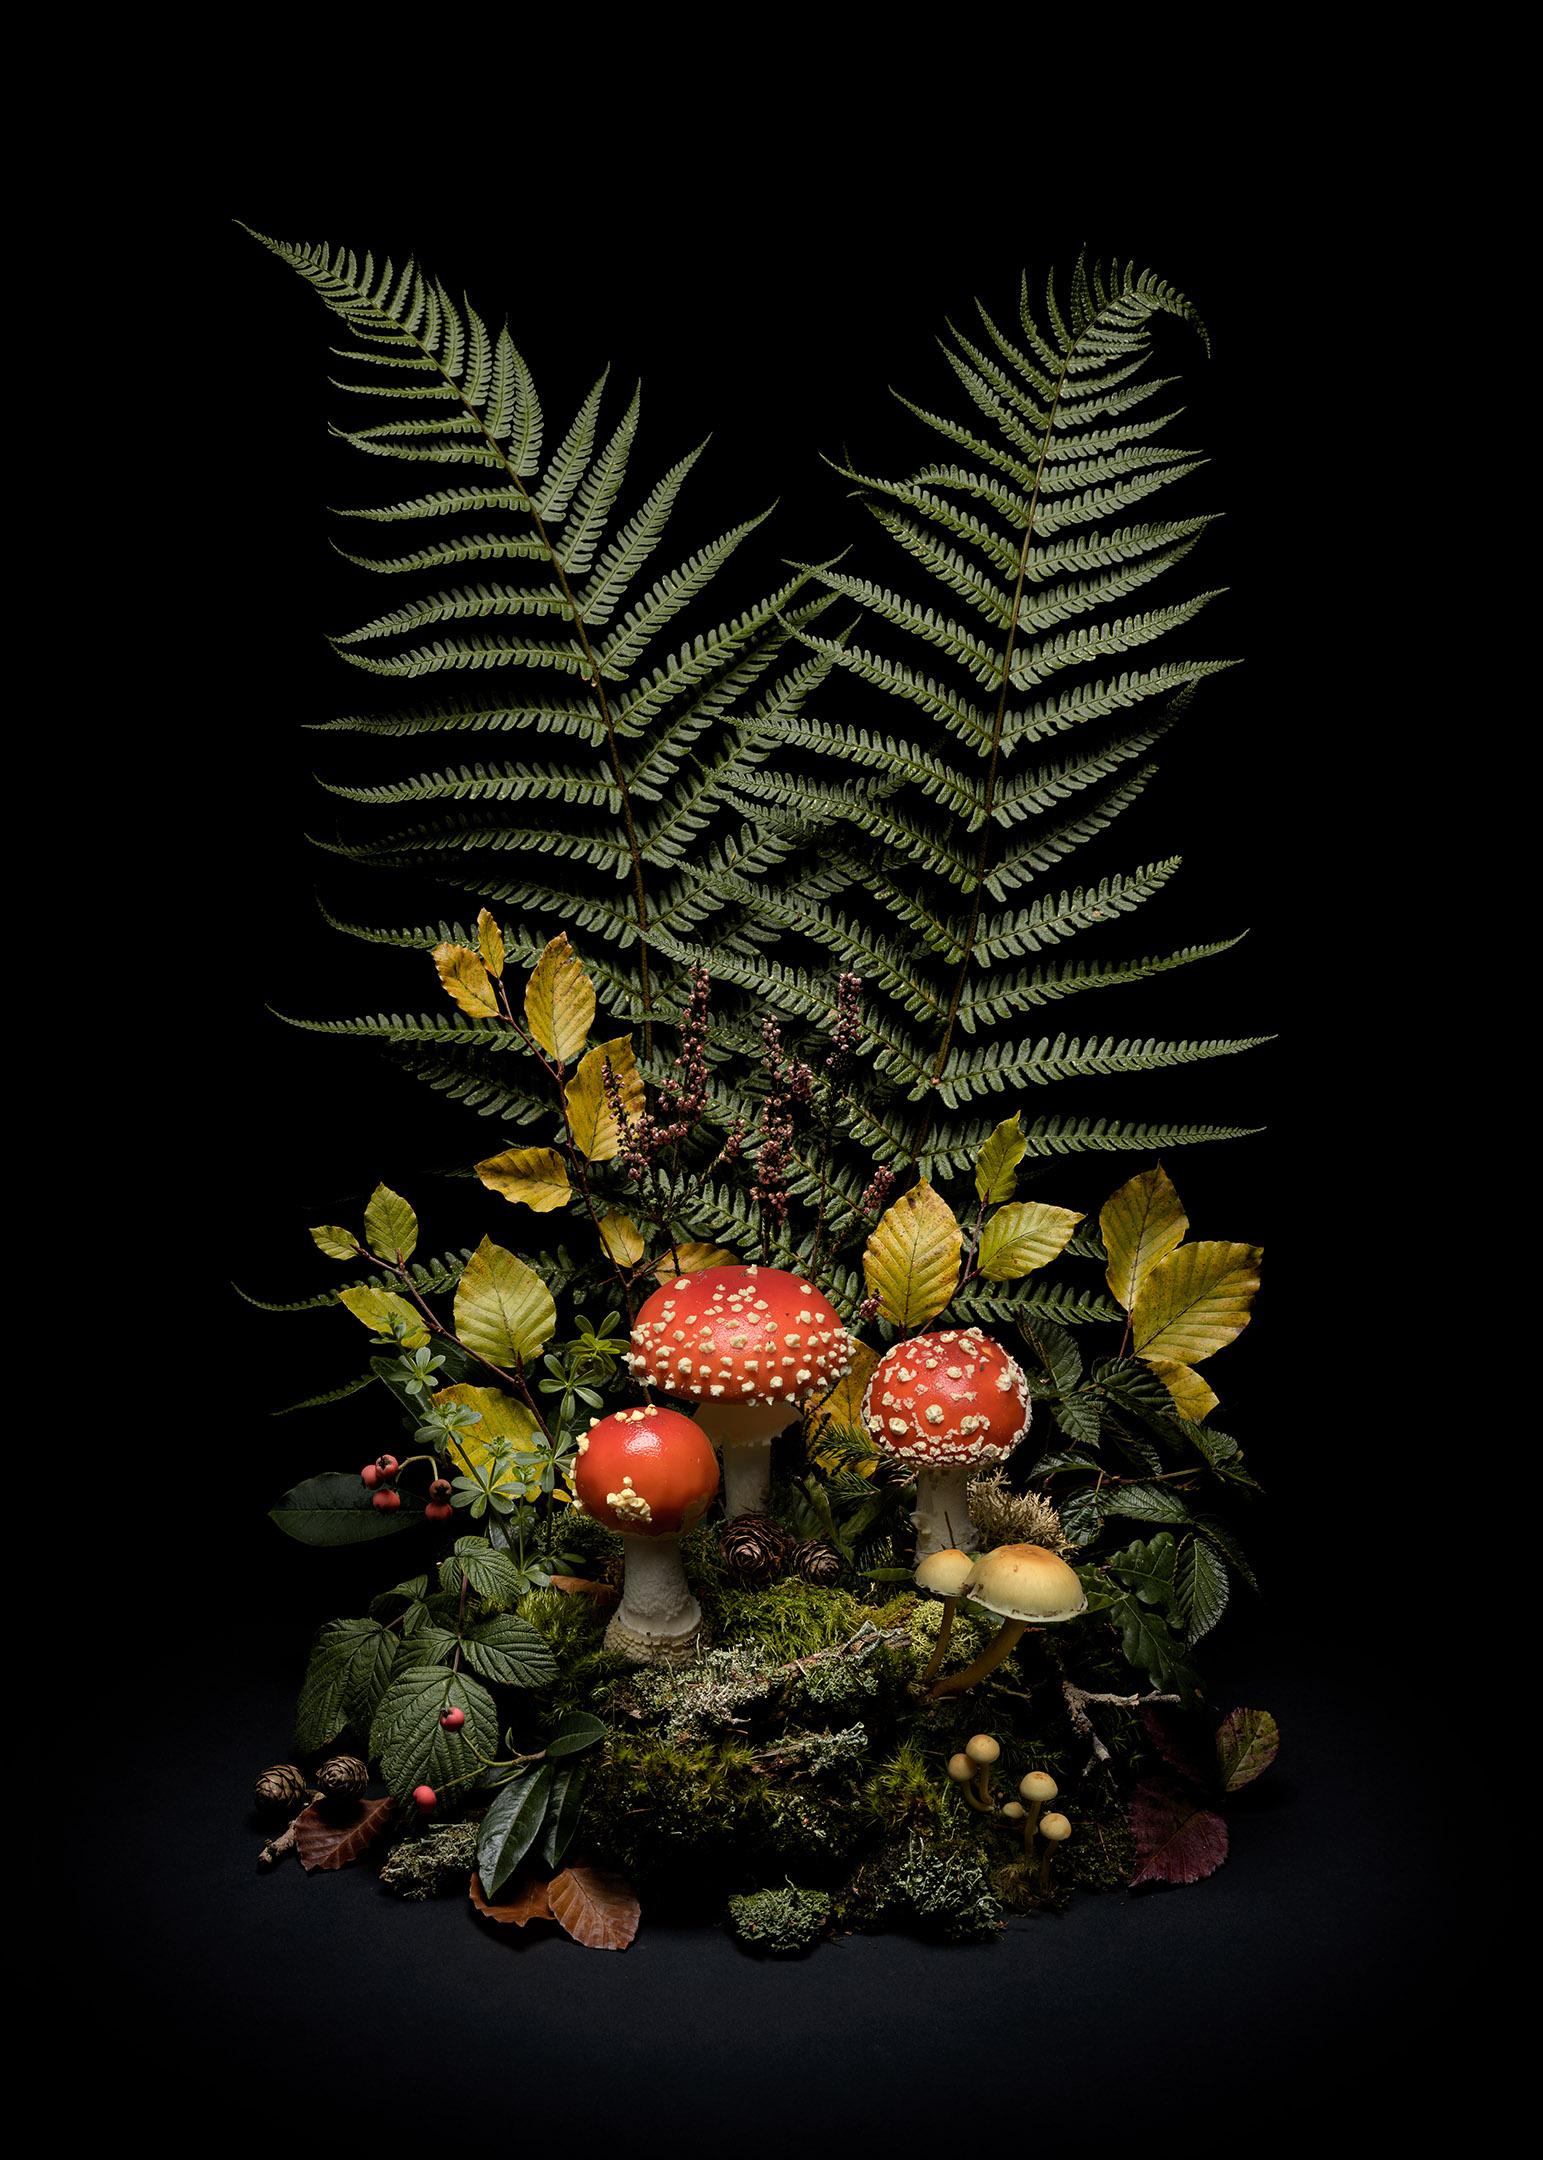 Dar Flora : Fly Argaric, May Foxgloves & Autumn Weald - Ensemble de 3 x impressions encadrées